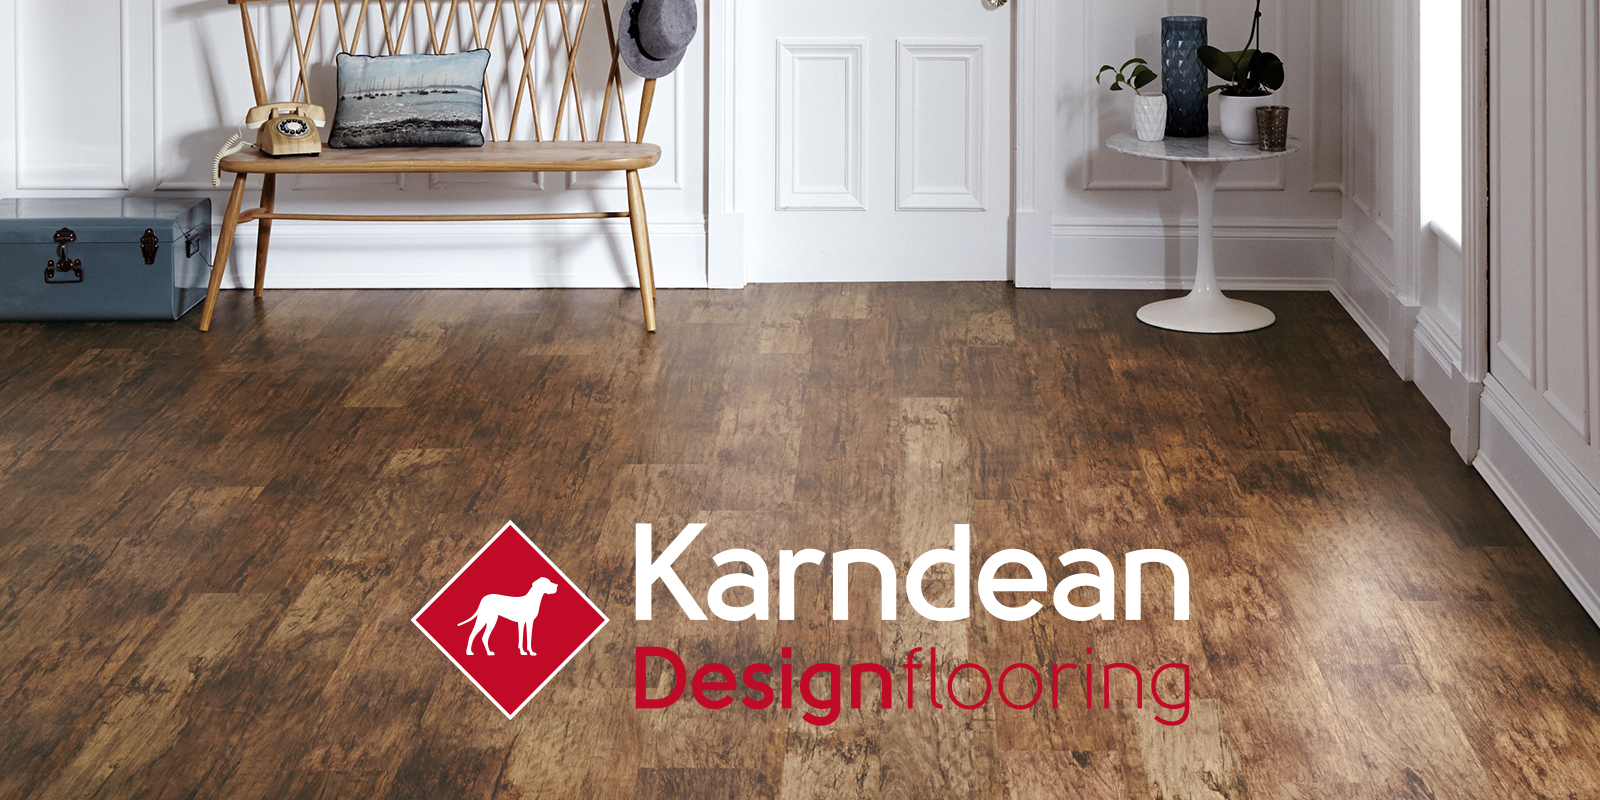 Karndean Flooring from Forrest Furnishing